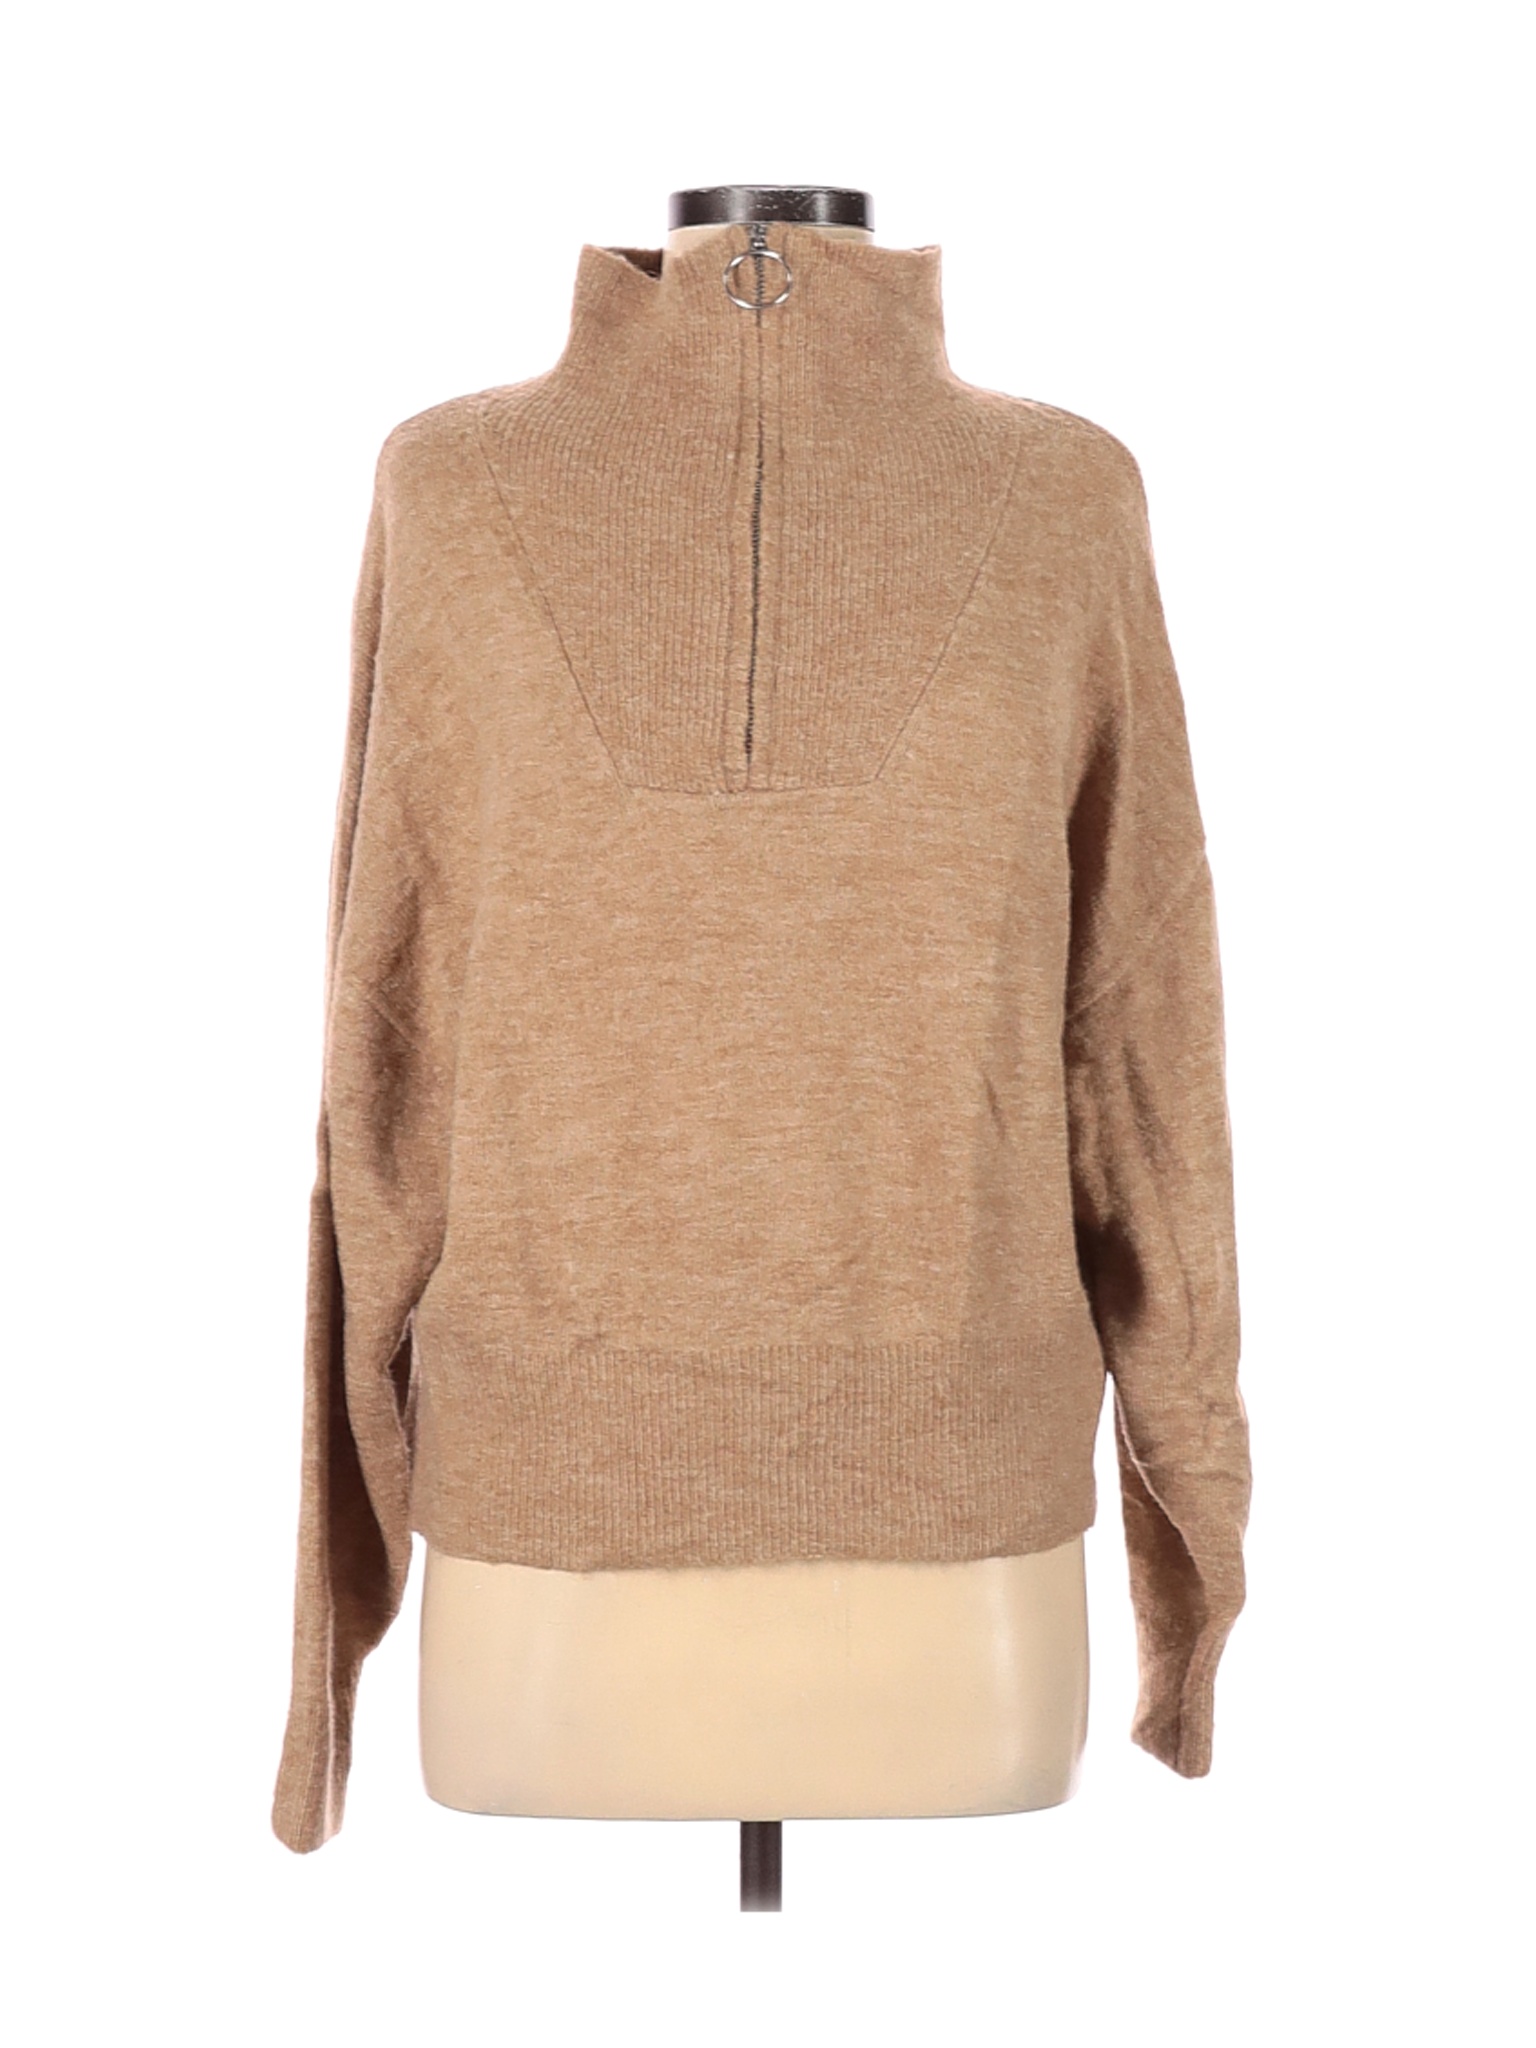 H&M Women Brown Turtleneck Sweater M | eBay